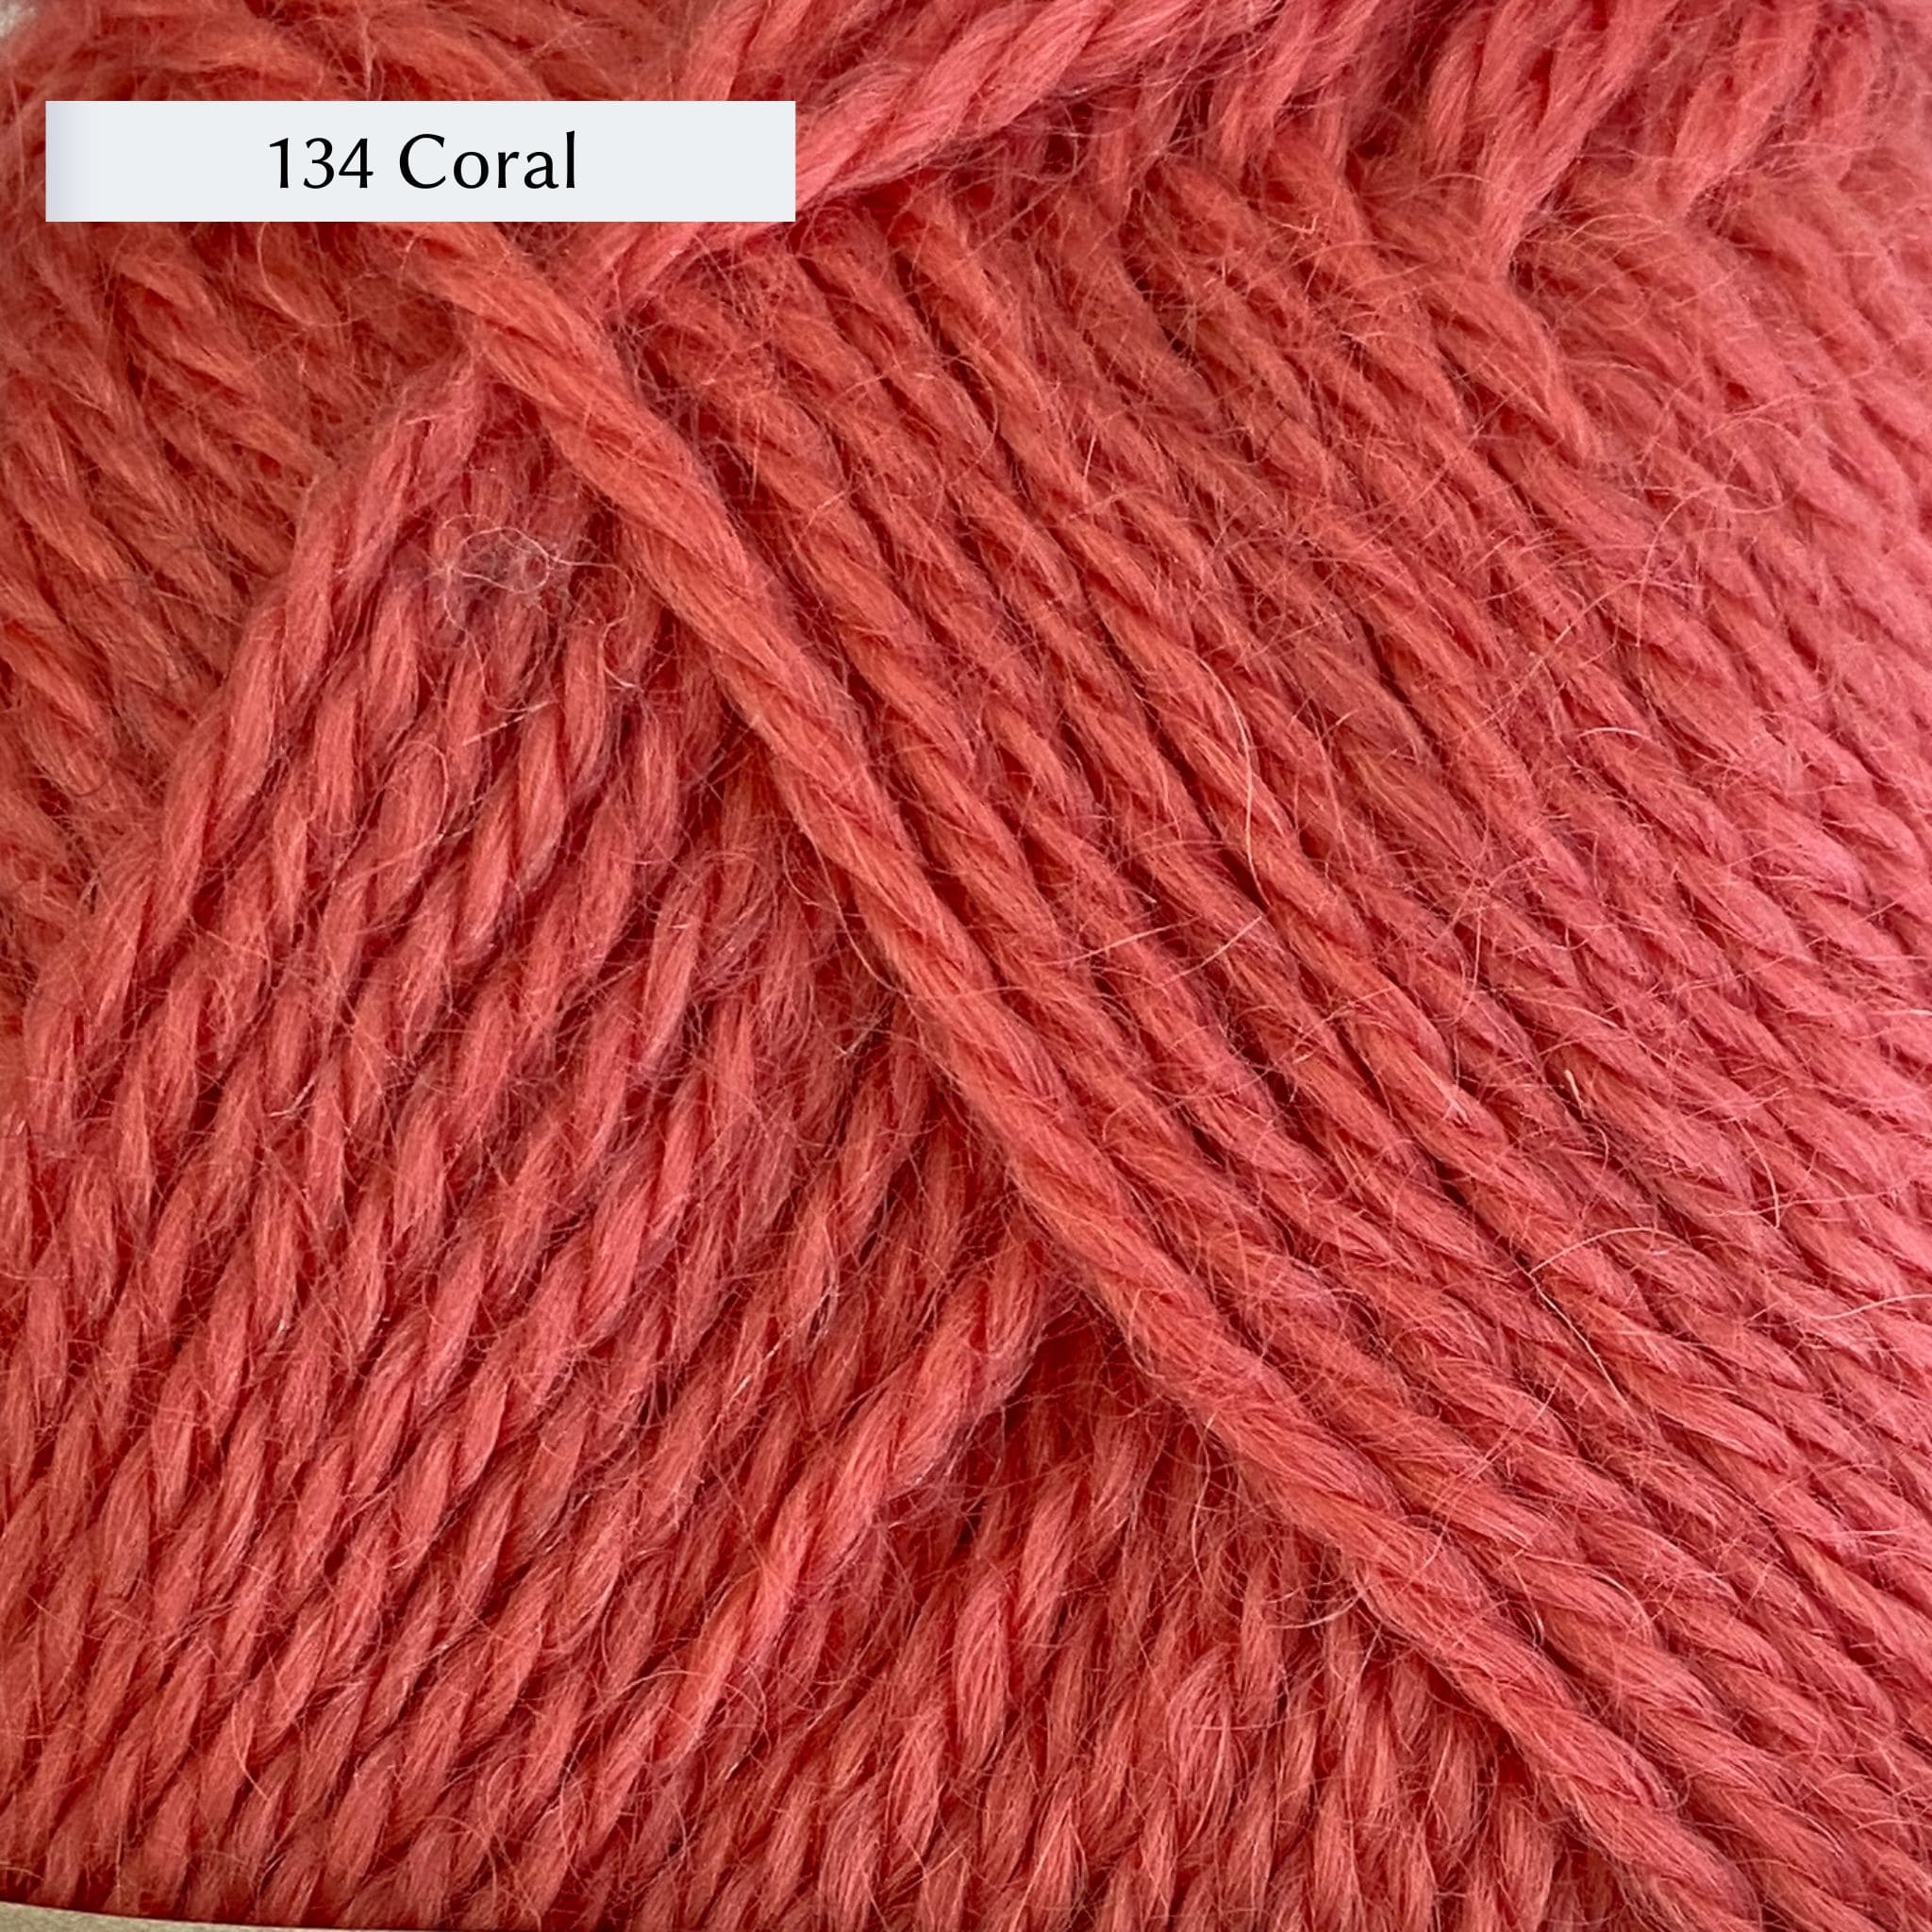 Wensleydale Longwool Aran, an aran weight yarn made from Wensleydale sheep, in color 134 Coral, a warm coral pink